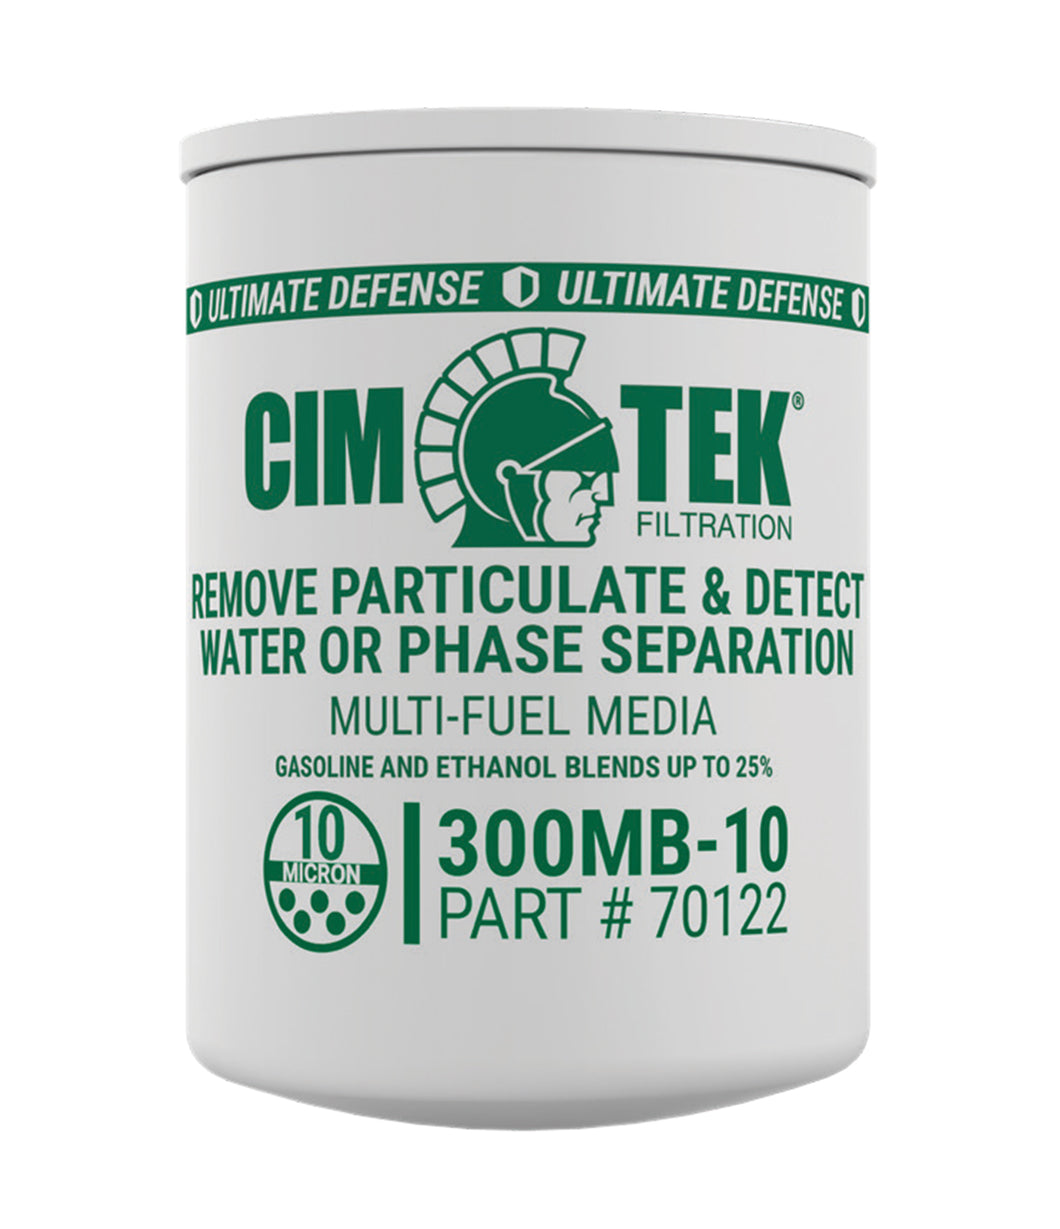 CimTek Filter 70122/300MB-10, 10 Micron, 3/4